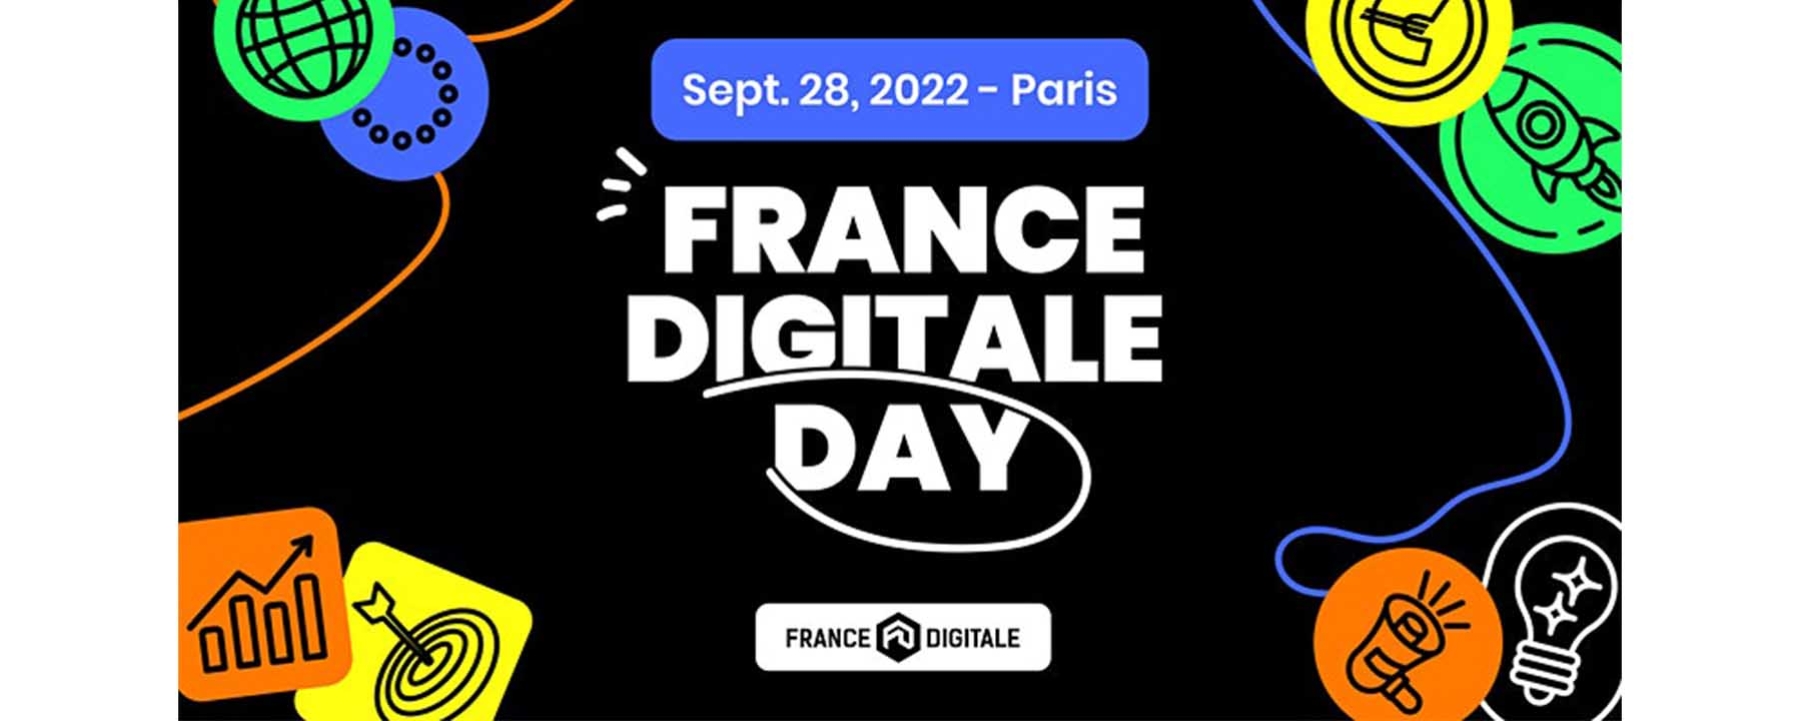 france digitale day